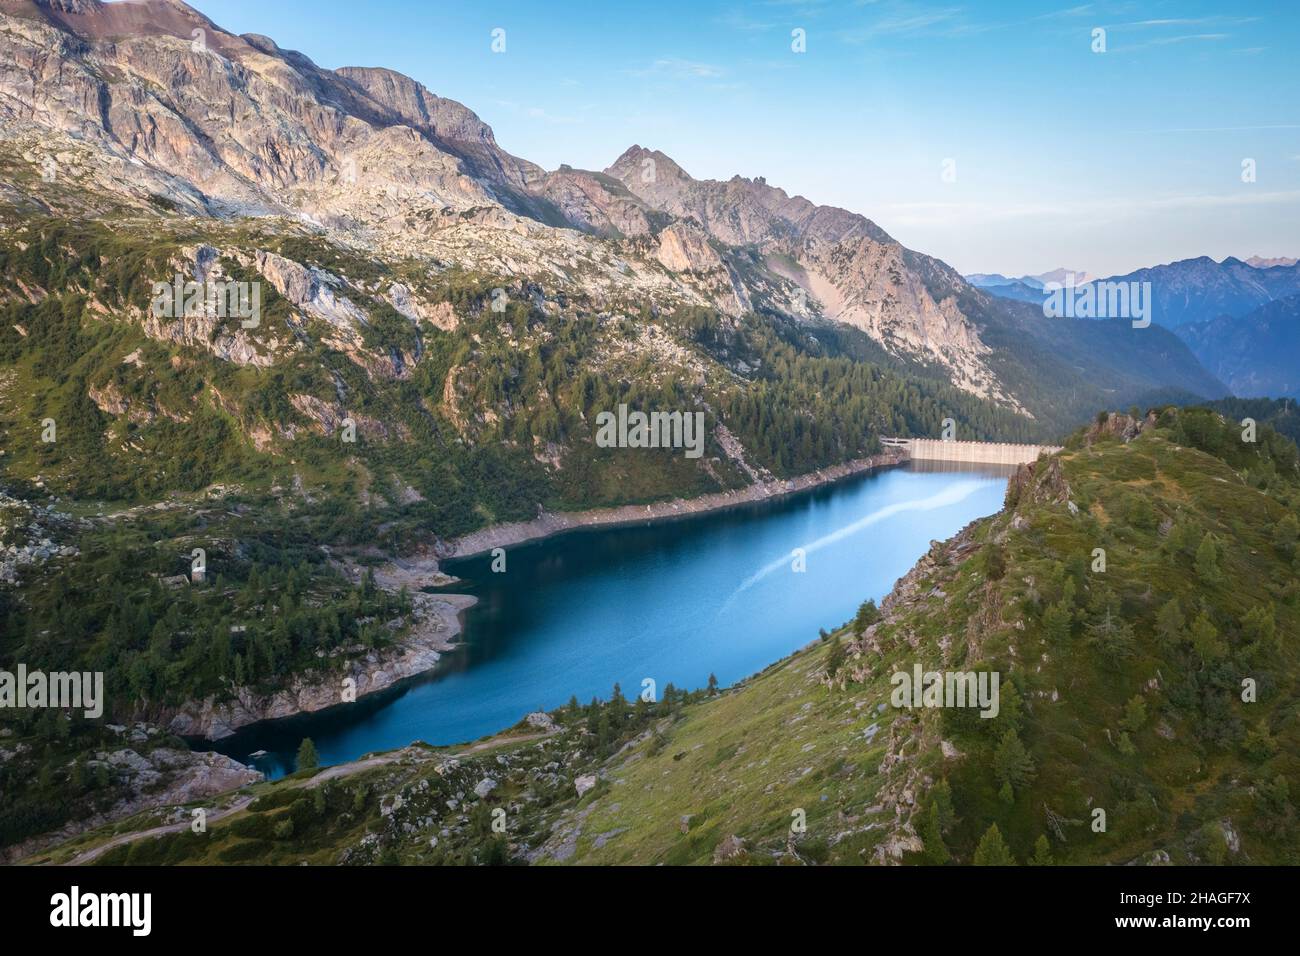 Summer view of Lago di Fregabolgia. Carona, Val Brembana, Alpi Orobie, Bergamo, Bergamo Province, Lombardy, Italy, Europe. Stock Photo